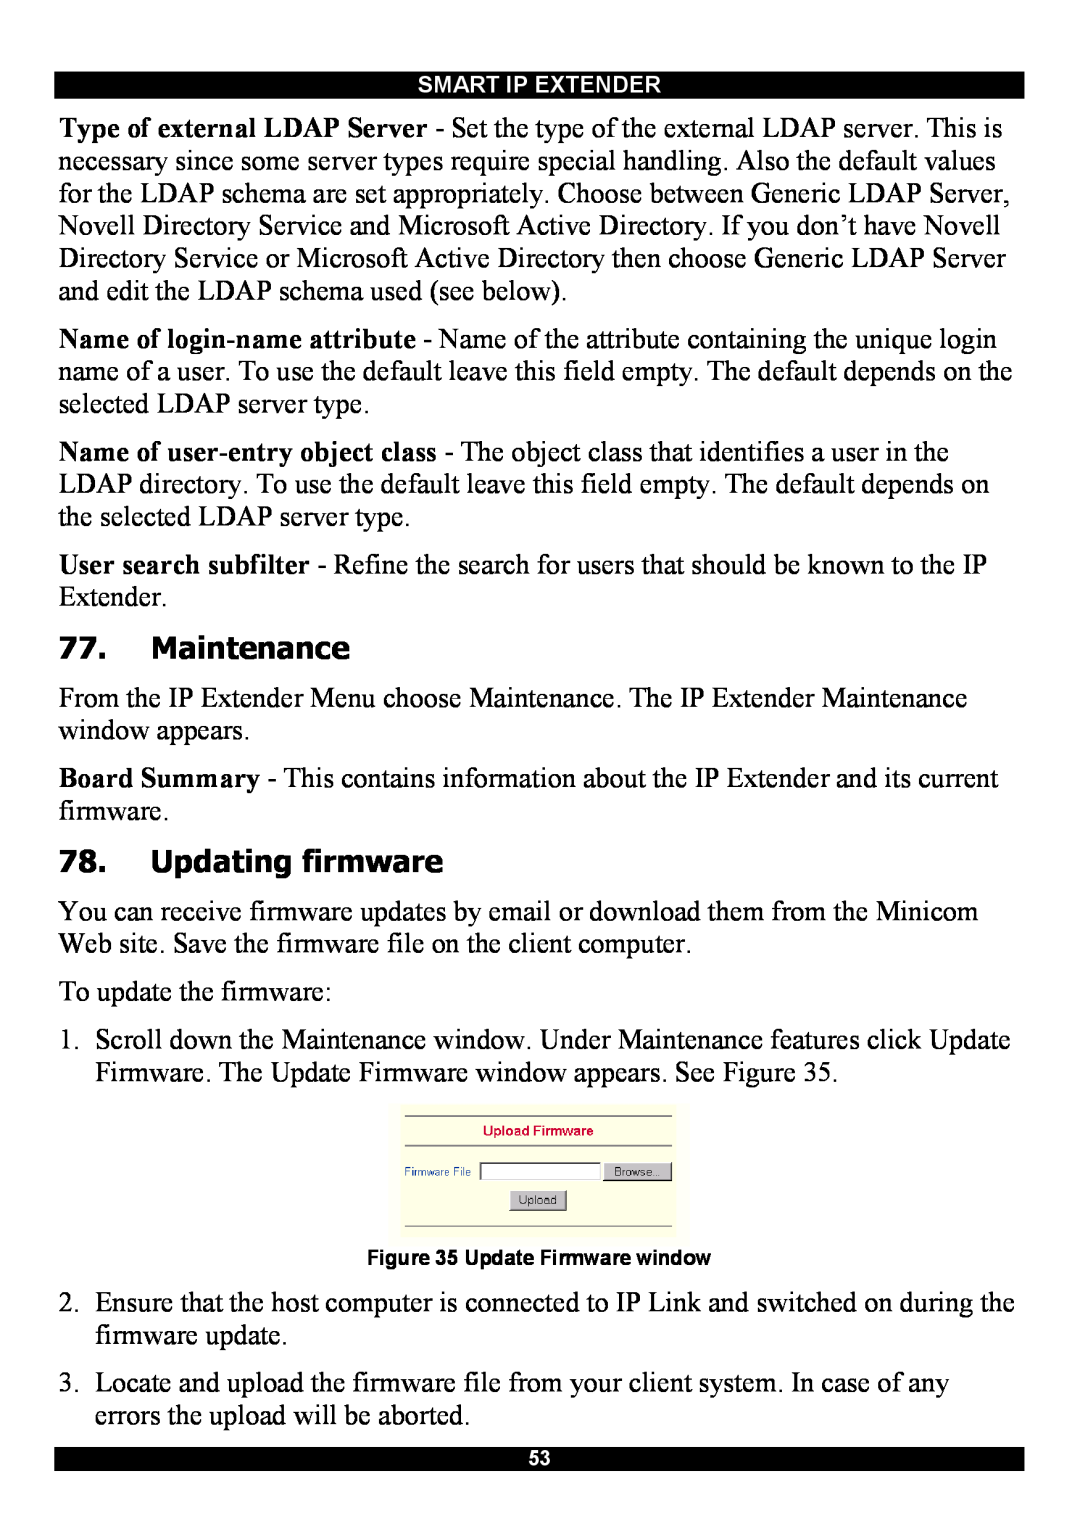 Minicom Advanced Systems Smart IP Extender manual Maintenance, Updating firmware 